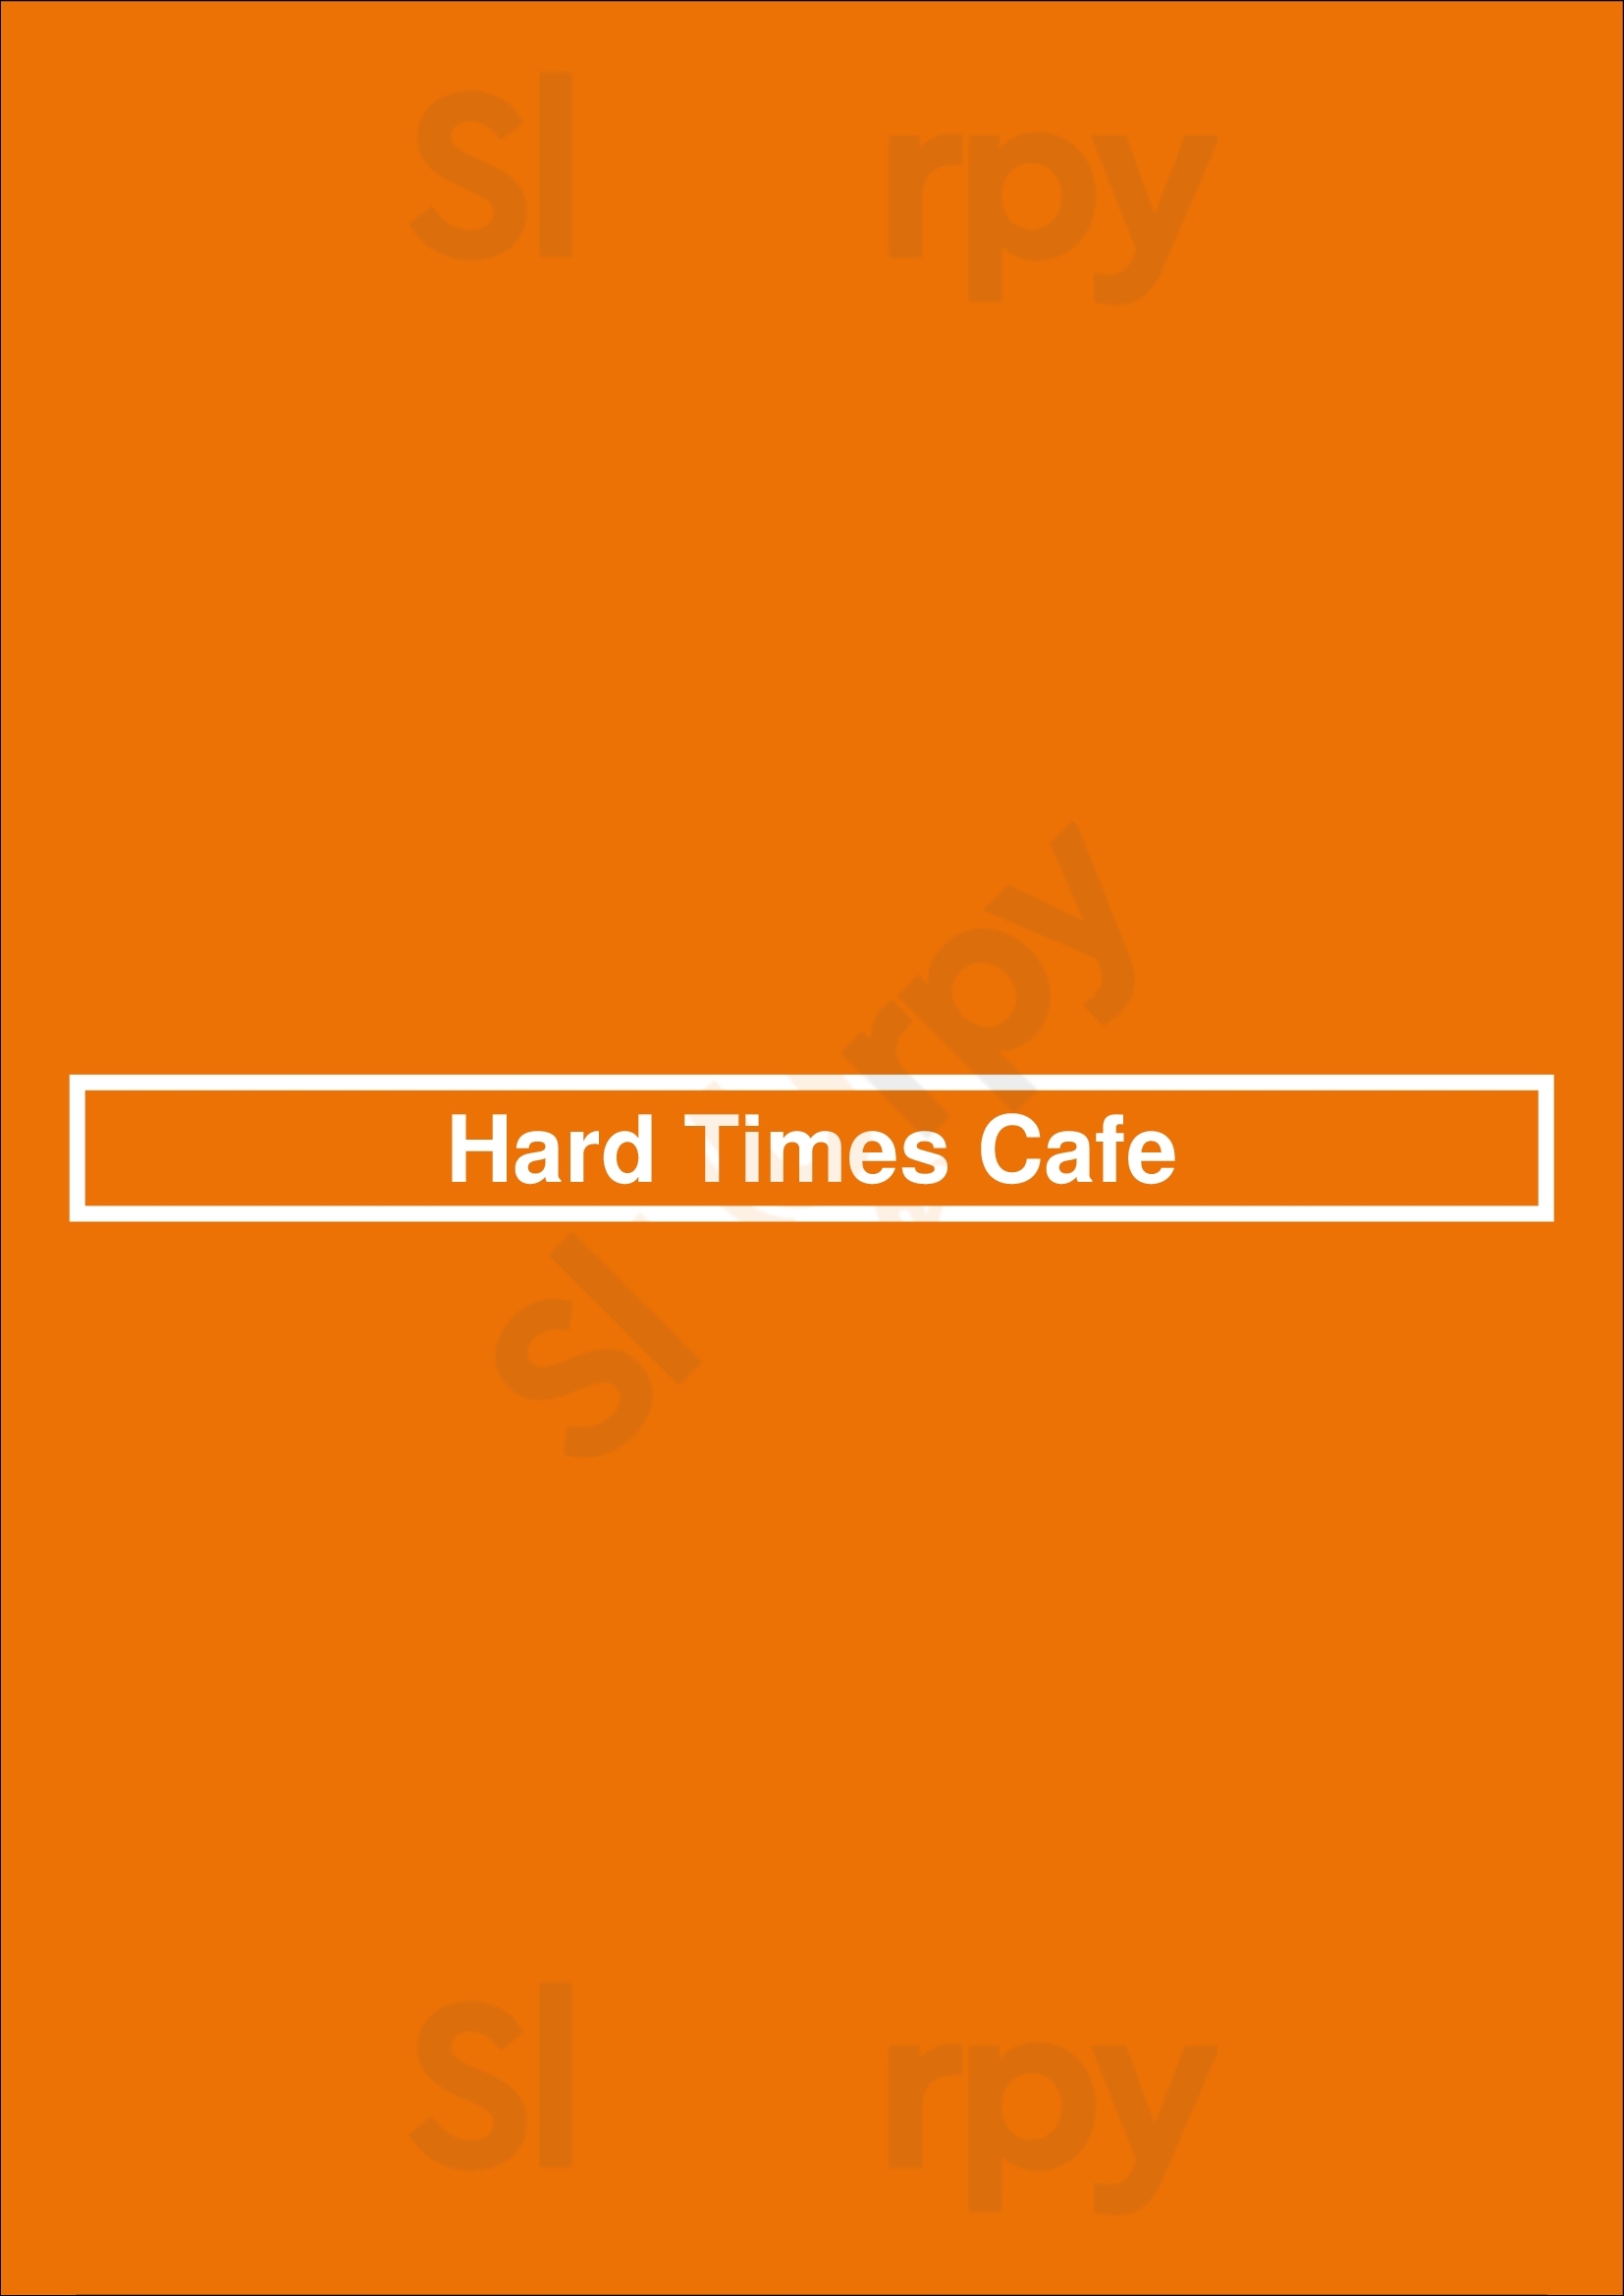 Hard Times Cafe Alexandria Menu - 1